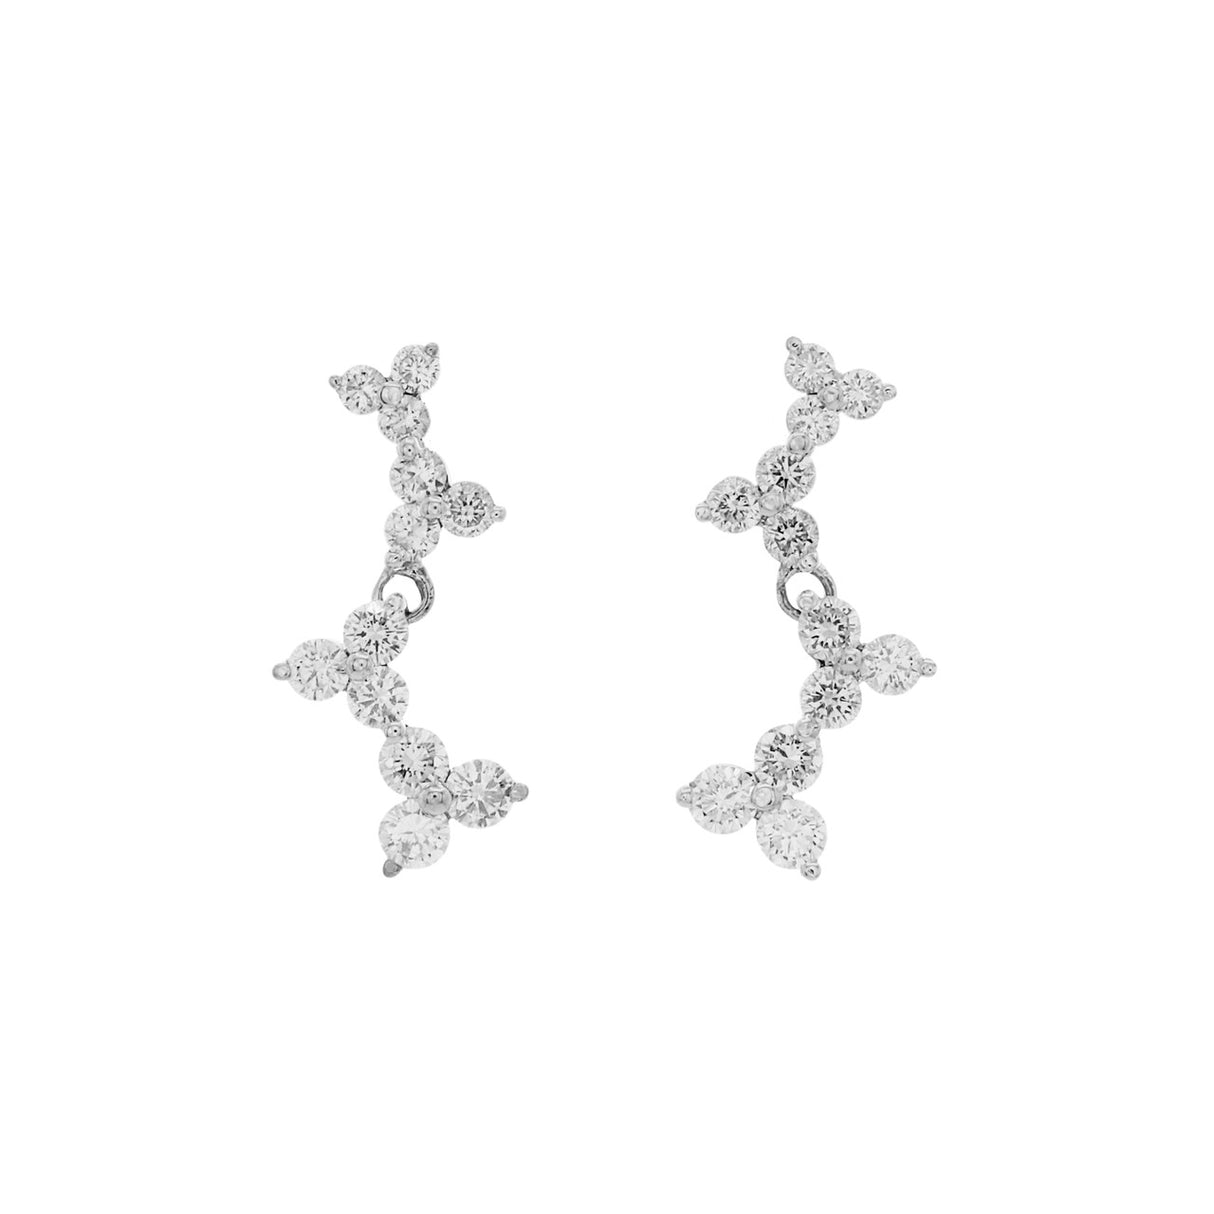 18K White Gold 0.54 Carat Diamond Drop Earrings